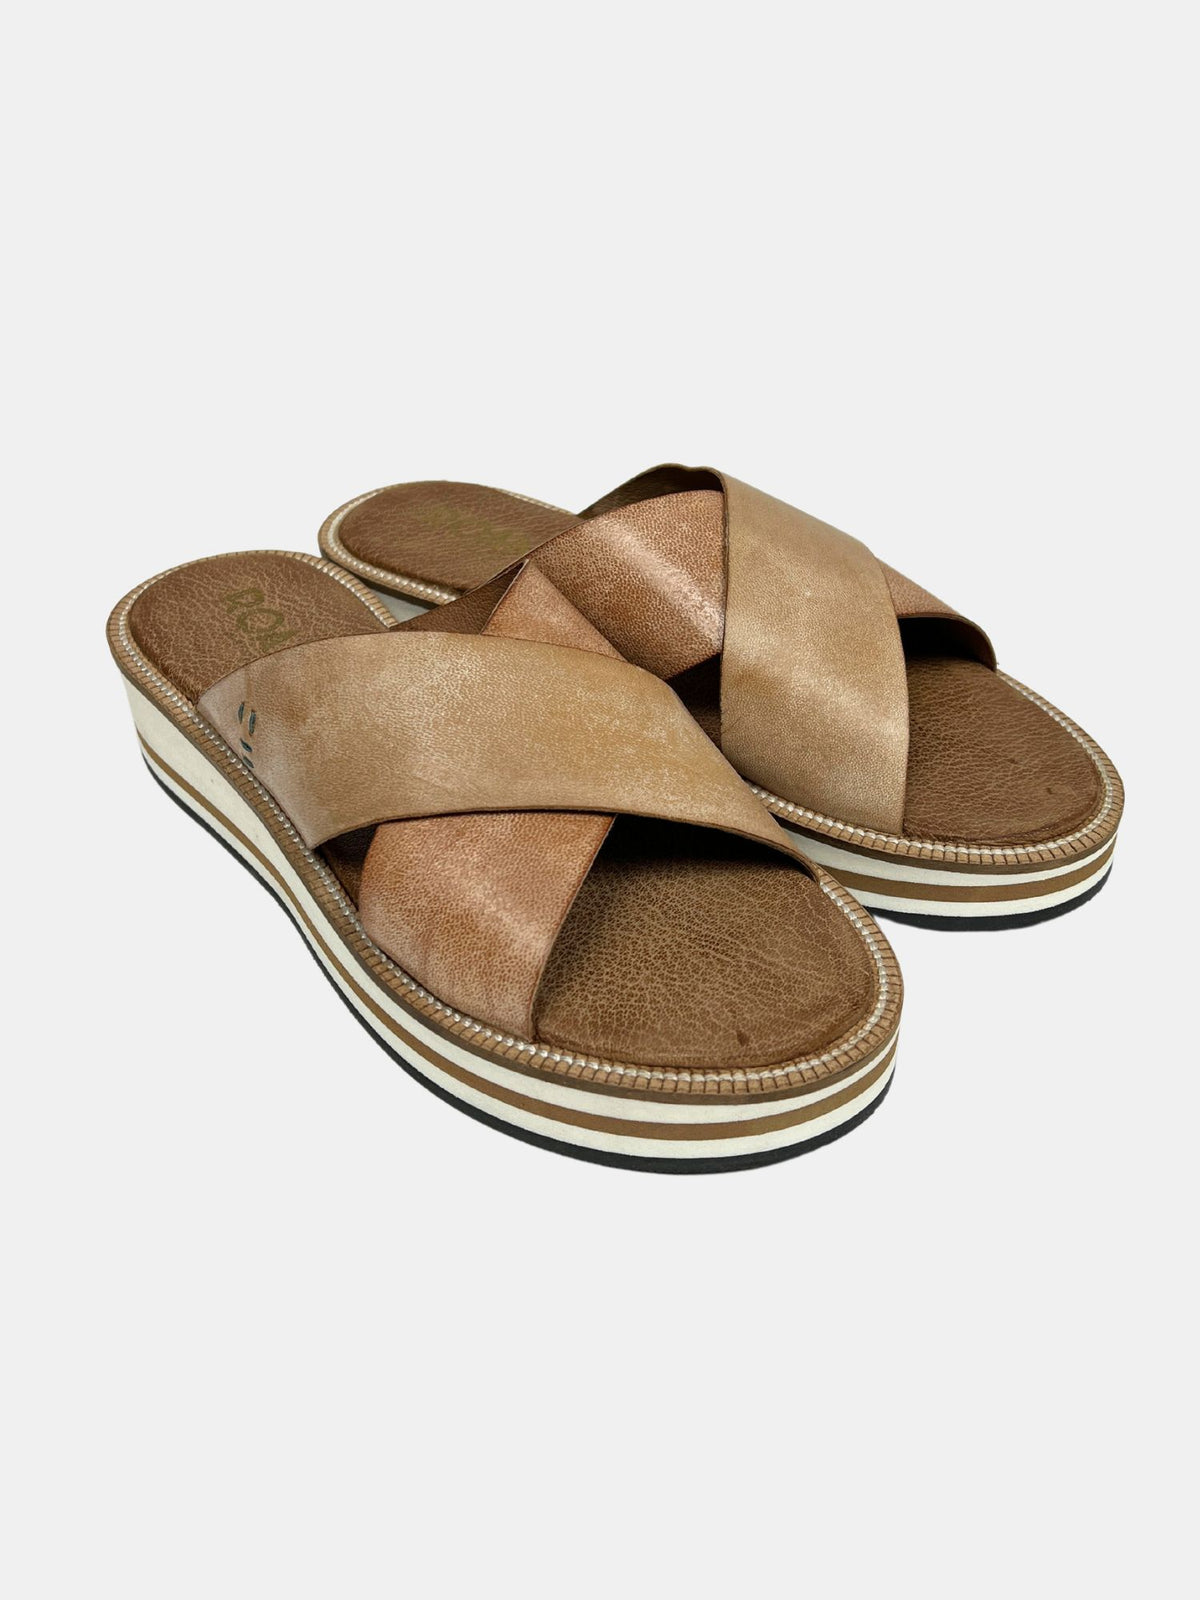 roan shout cross strap sandals in pecan white-pair